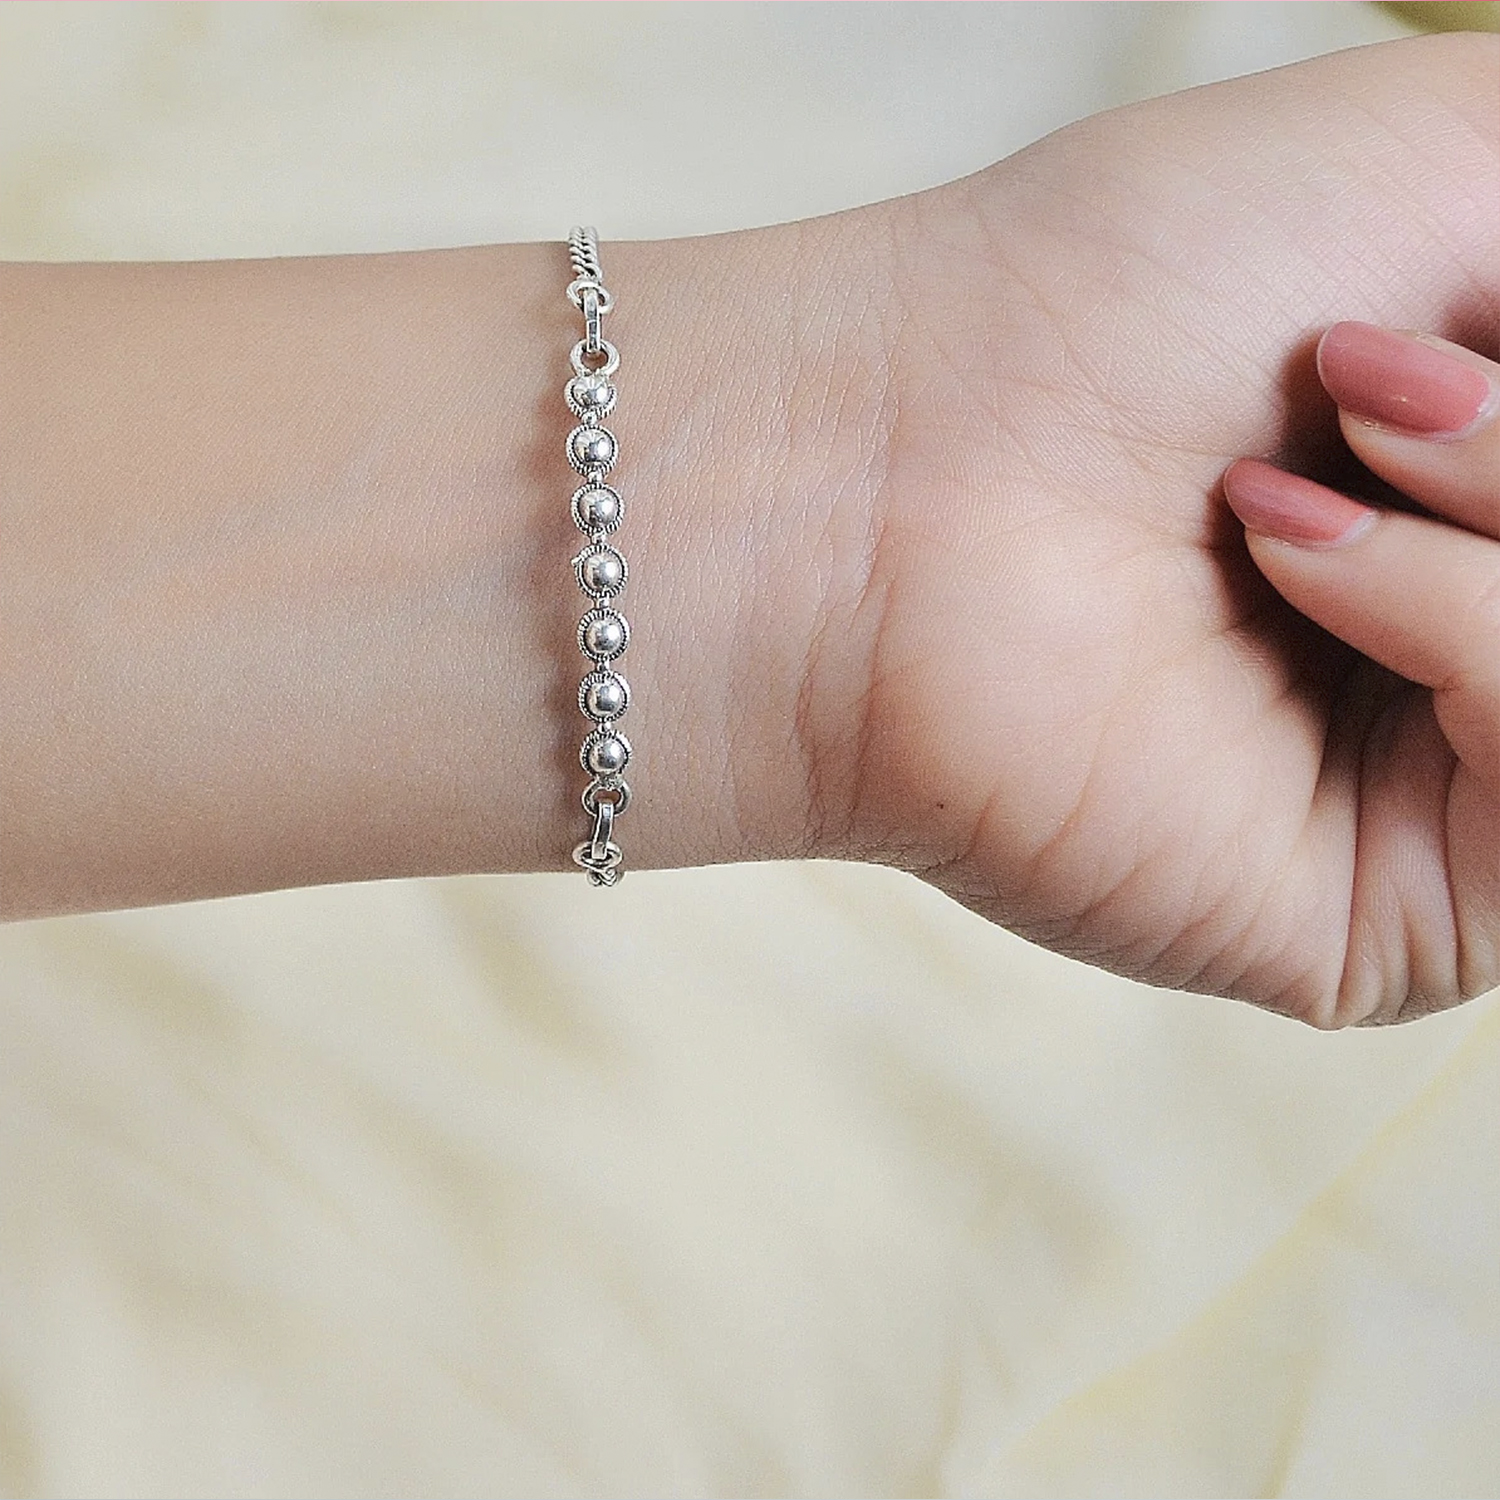 80 % Ladies Sterling Silver Bracelet, Size: Adjustable, 15 Grams